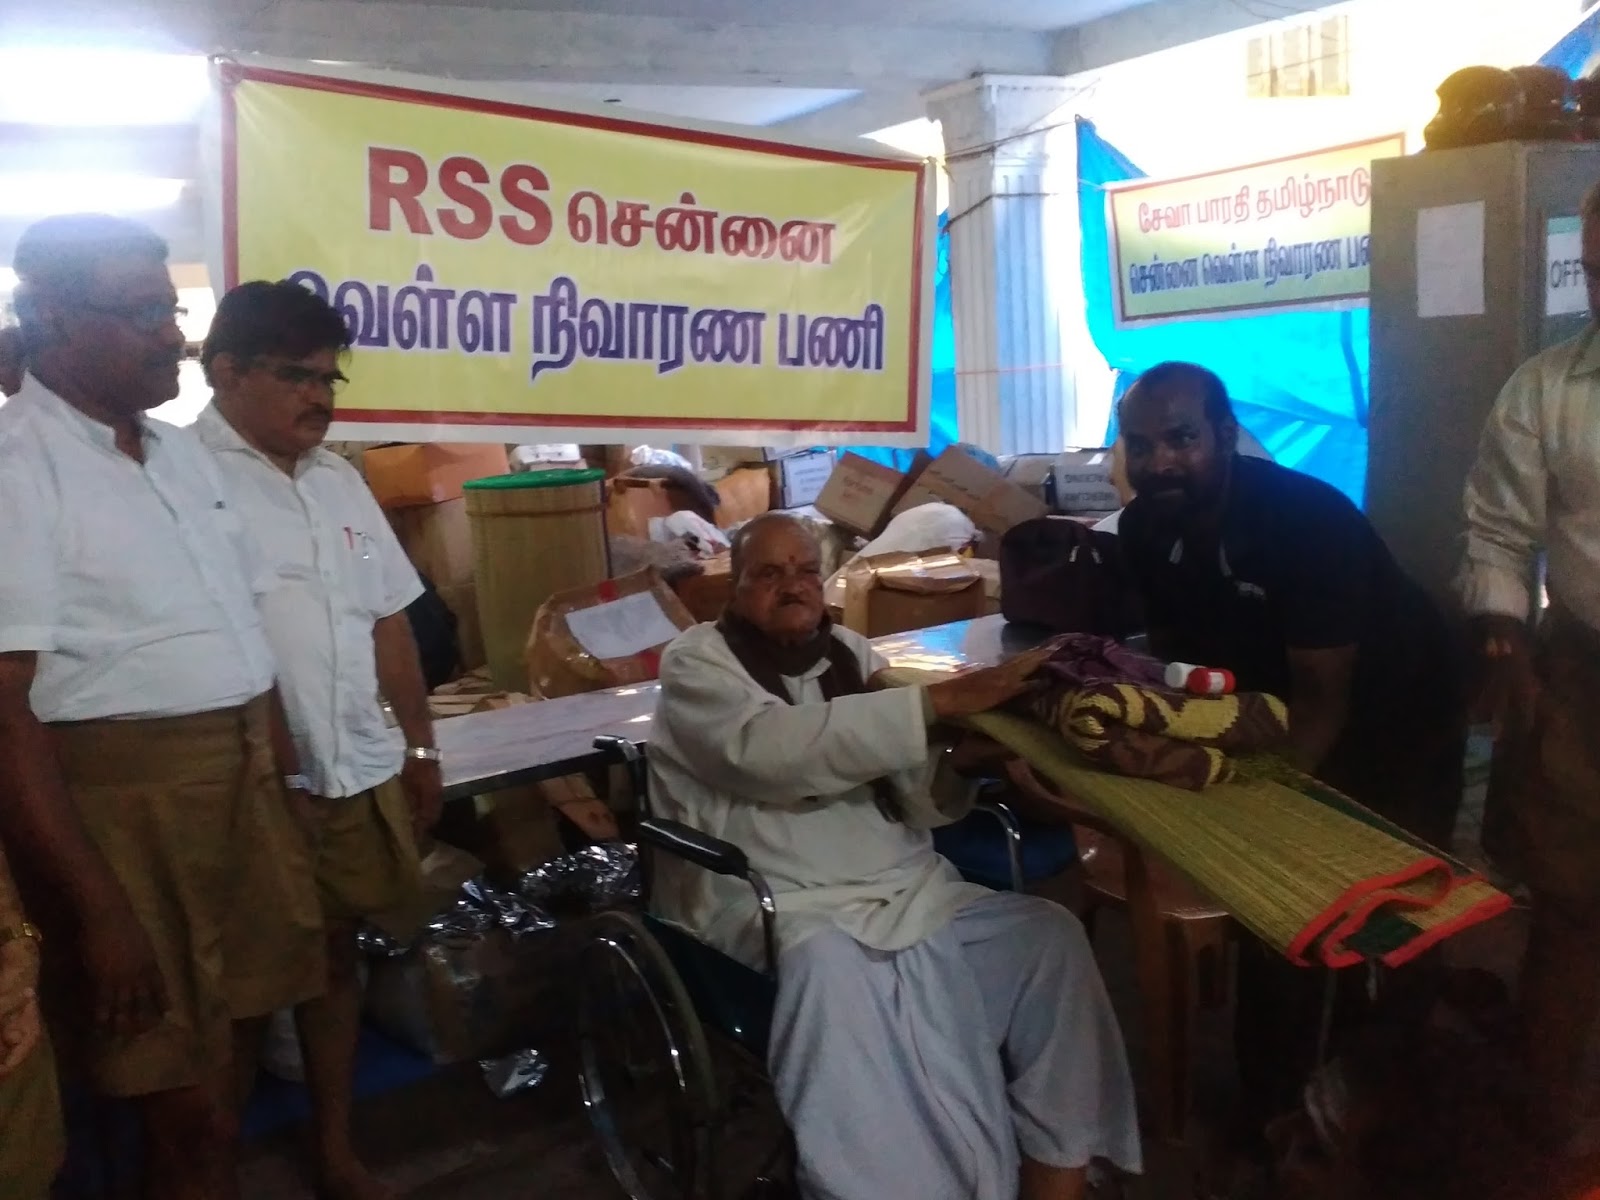 RSSS Veteran K Suryanarayan Rao joined RSS Post-rain flood relief activities in Chennai